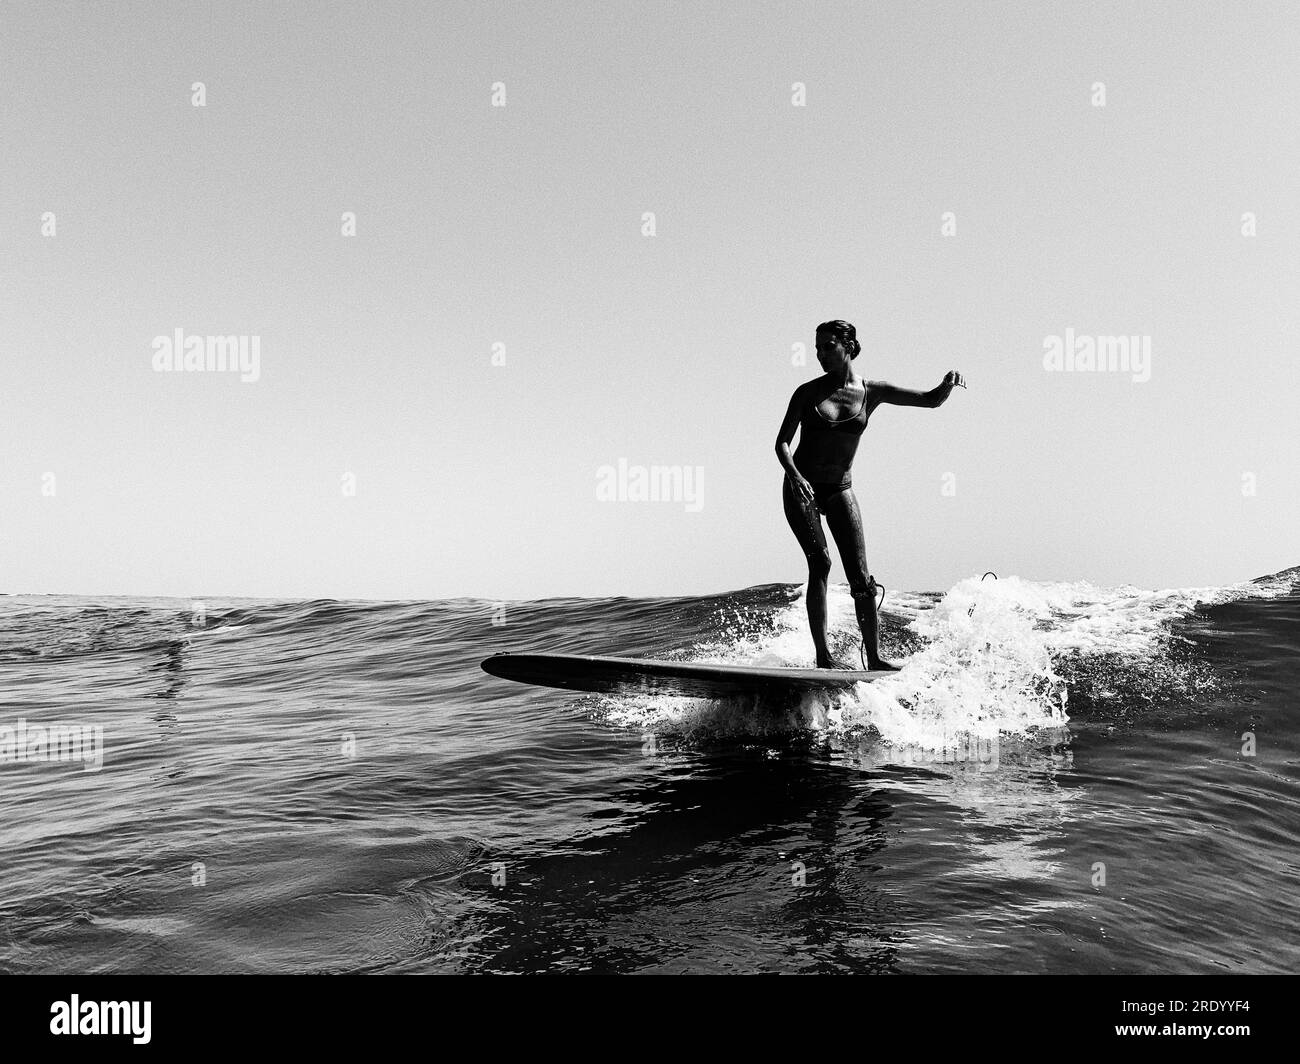 A female surfer in a bikini rides a small wave, black and white Stock Photo